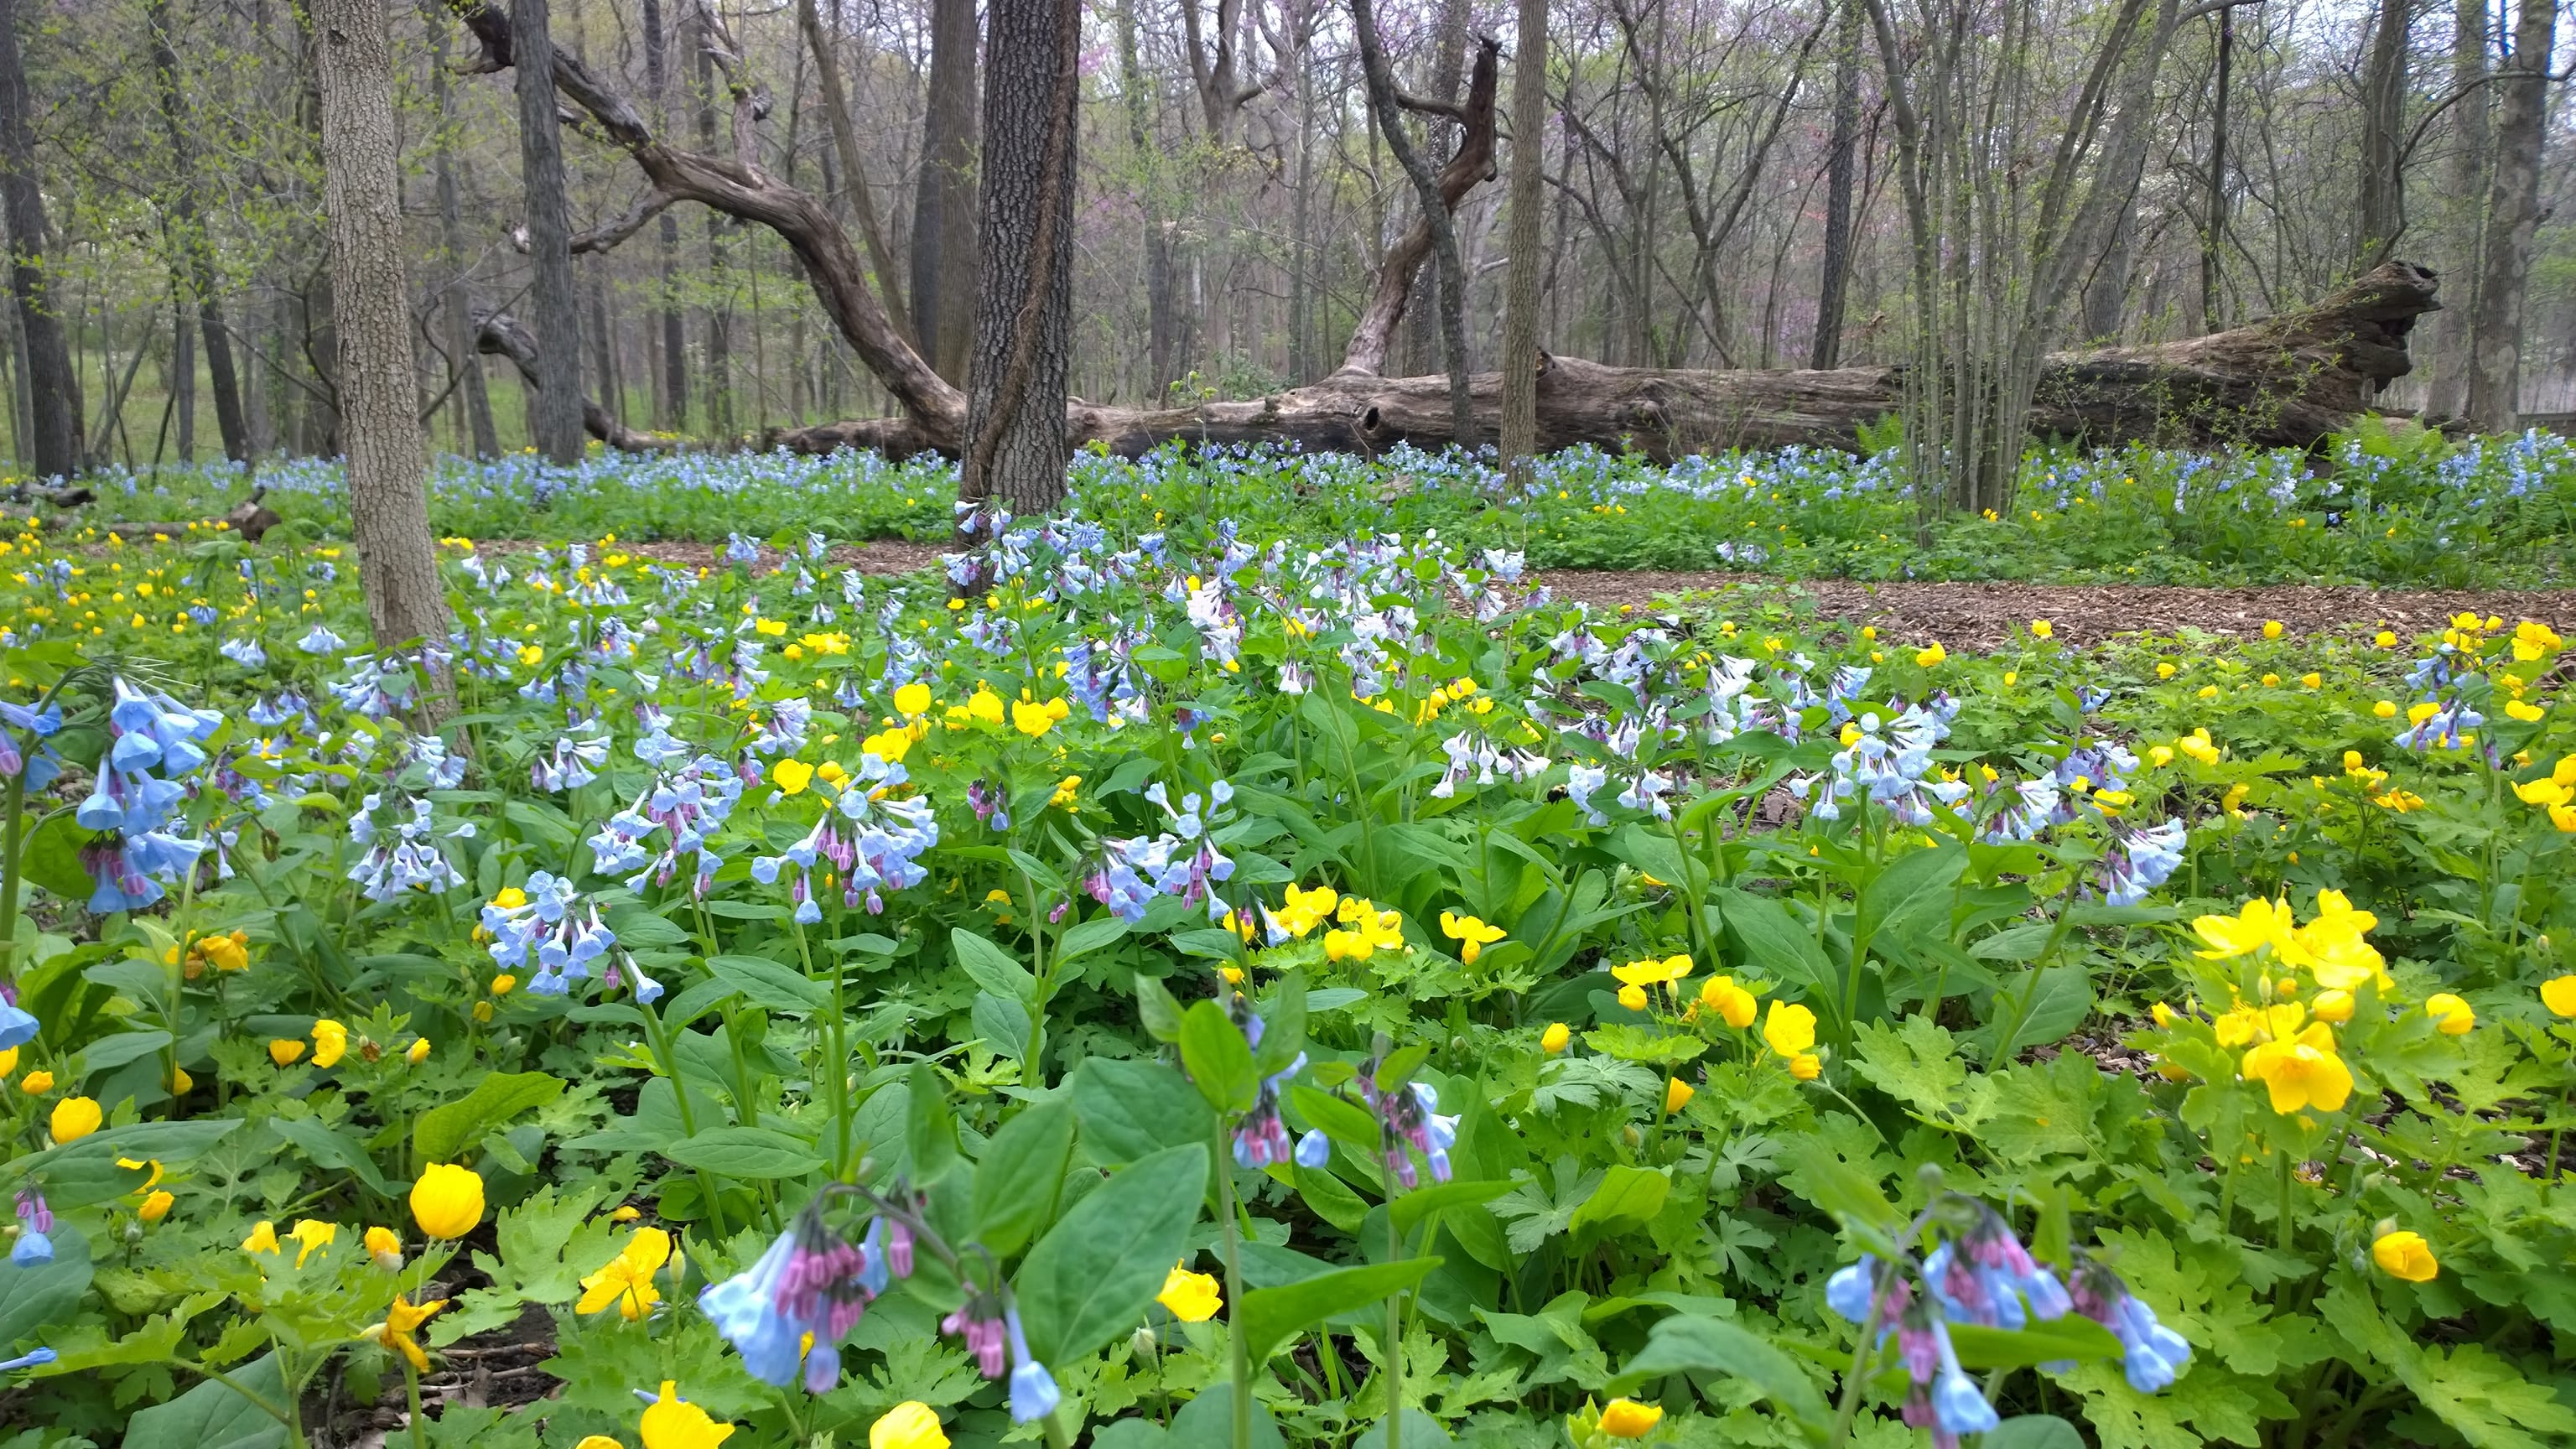 Celandine poppies and bluebells at the Missouri Botanical Garden. Credit: Scott Woodbury